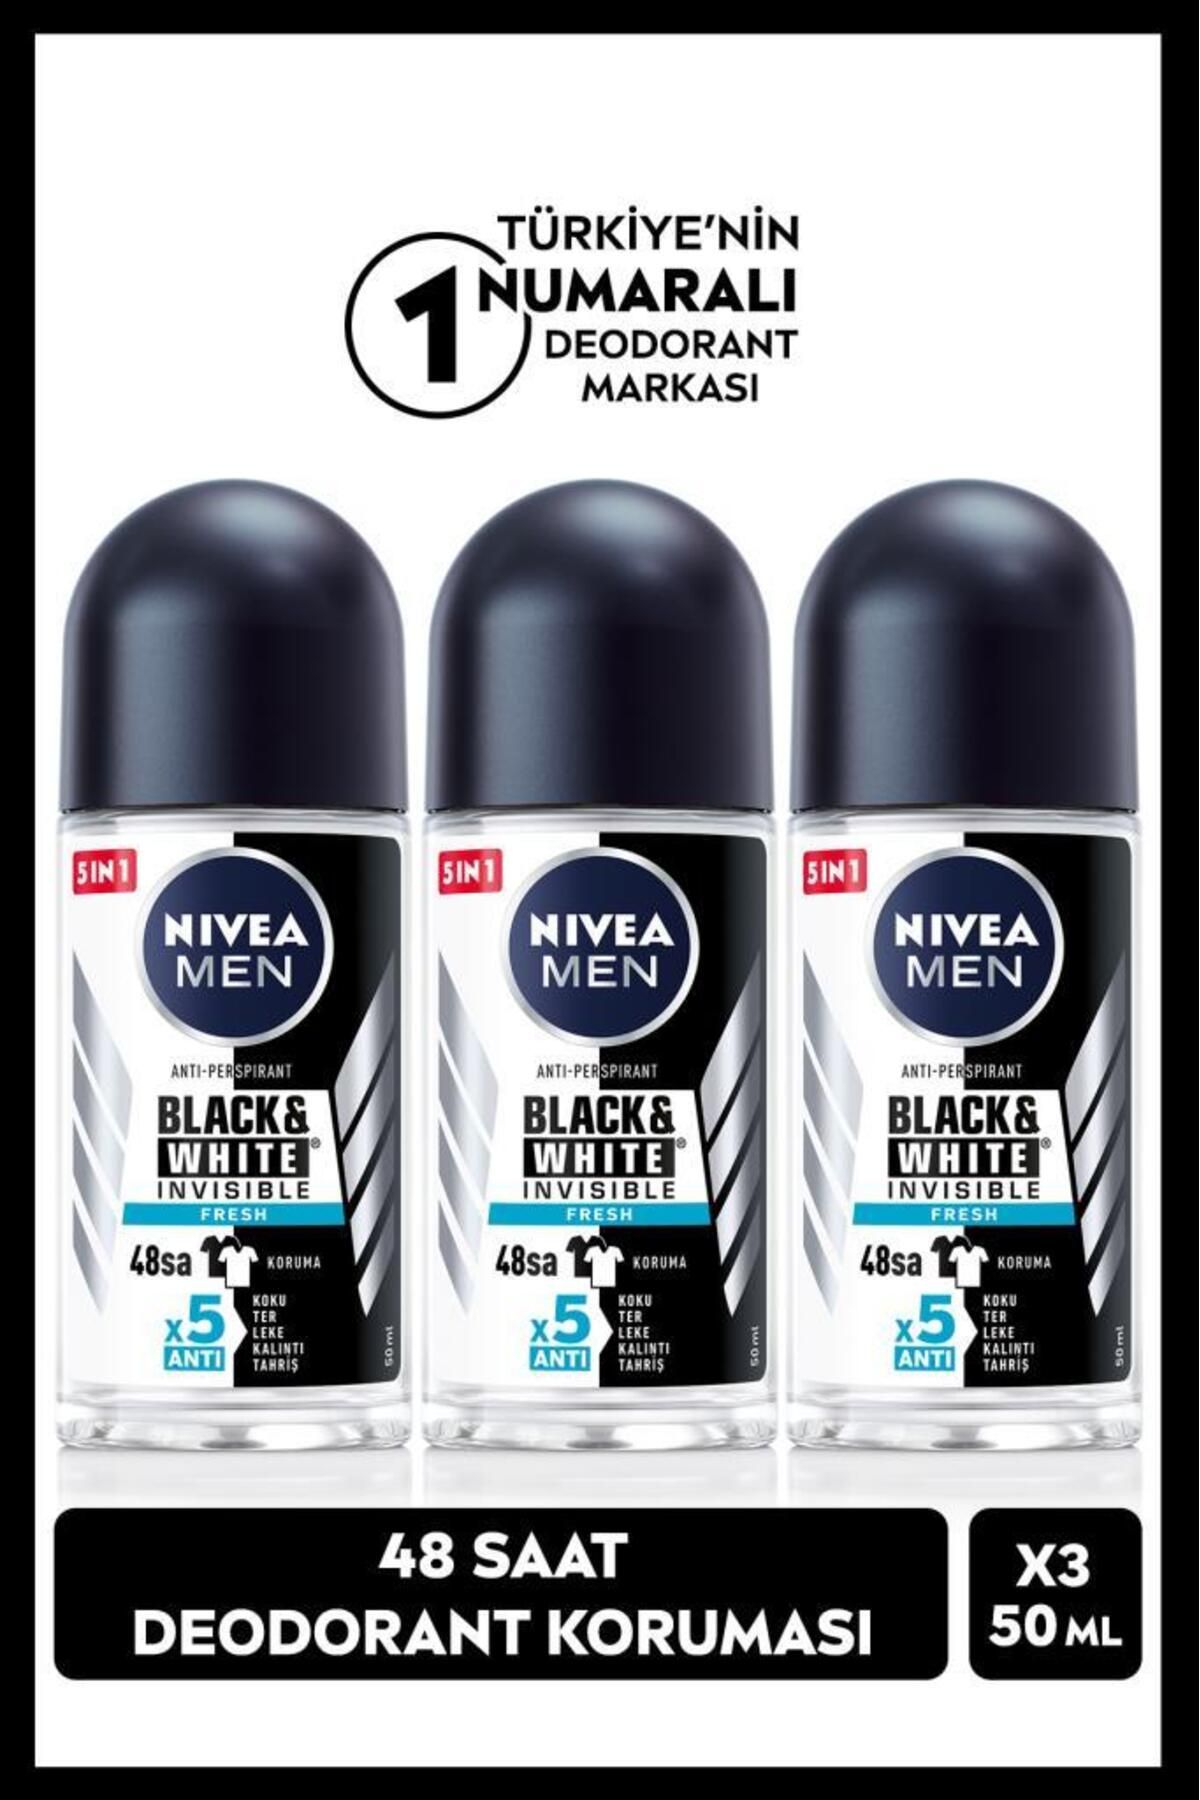 NIVEA MEN Erkek Roll-on Deodorant Black&White Fresh 50ml, 48 Saat Koruma, X3 Adet